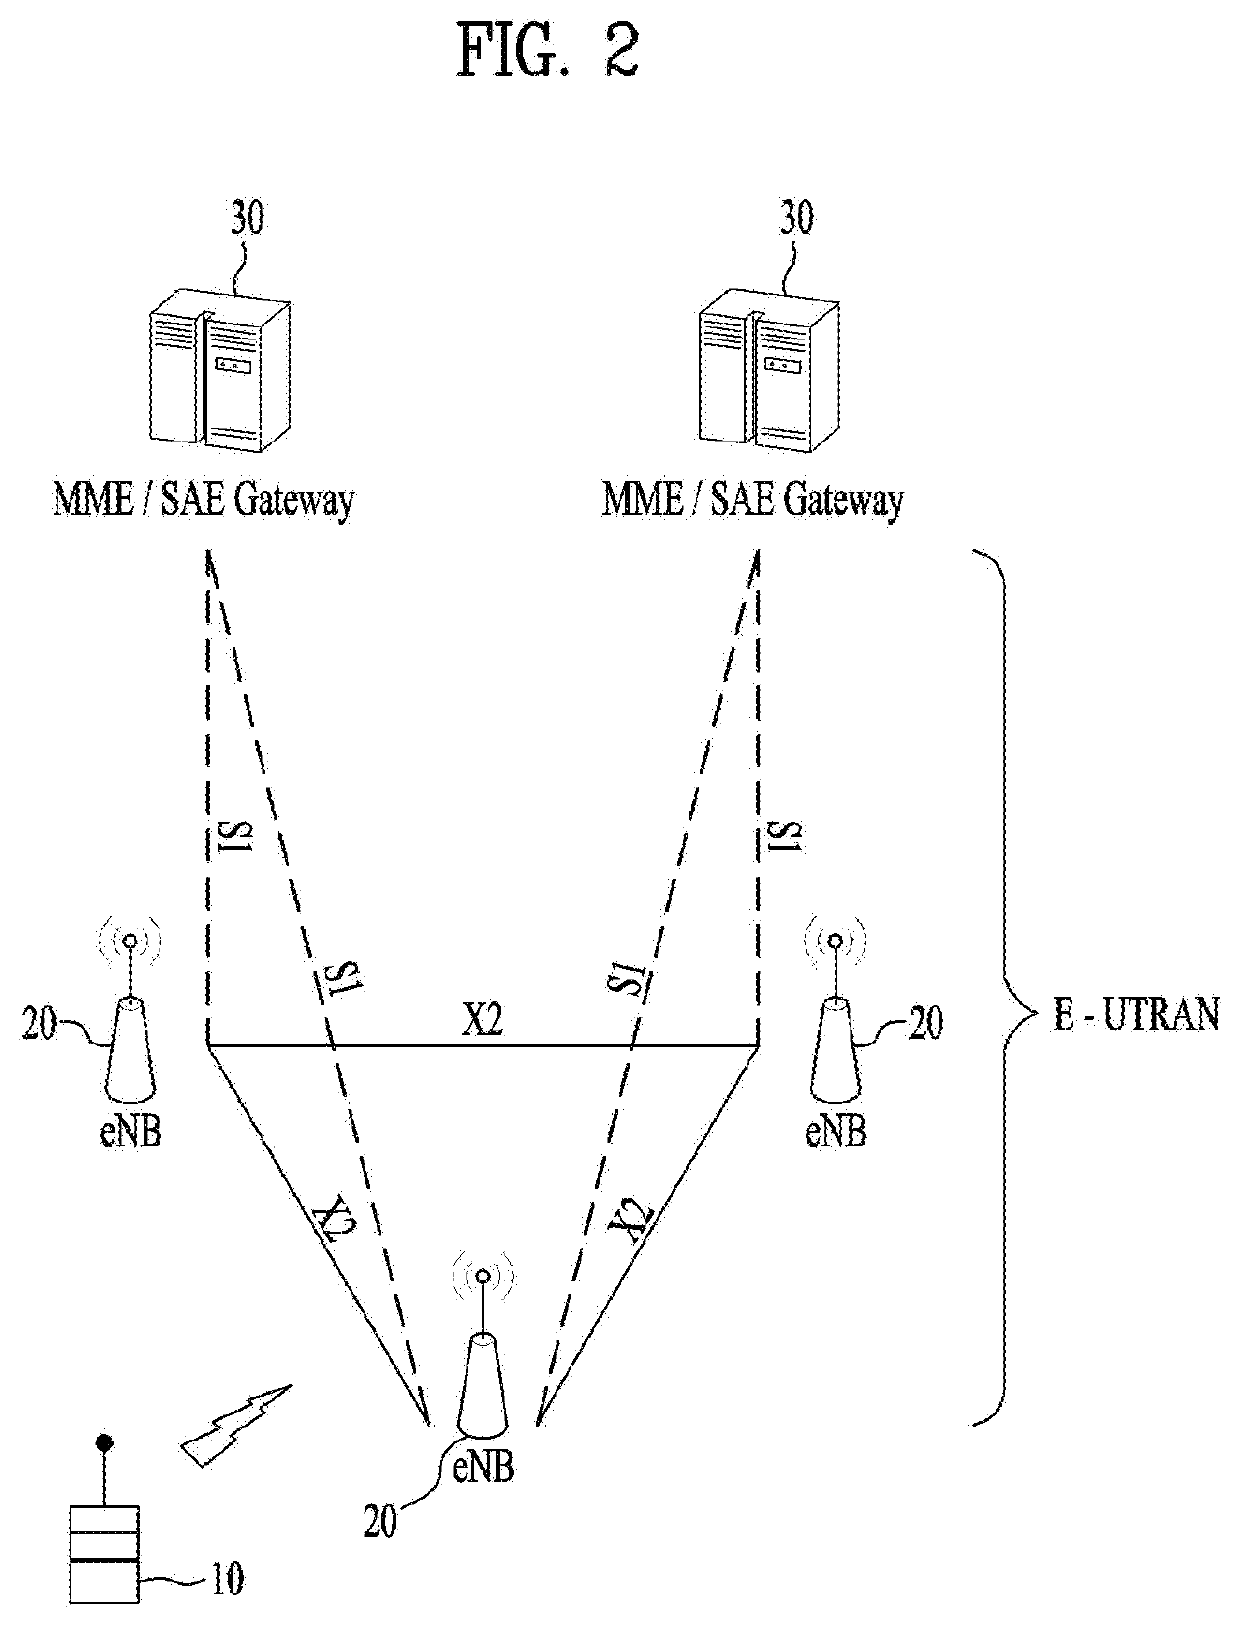 Method and user equipment for transmitting uplink signals